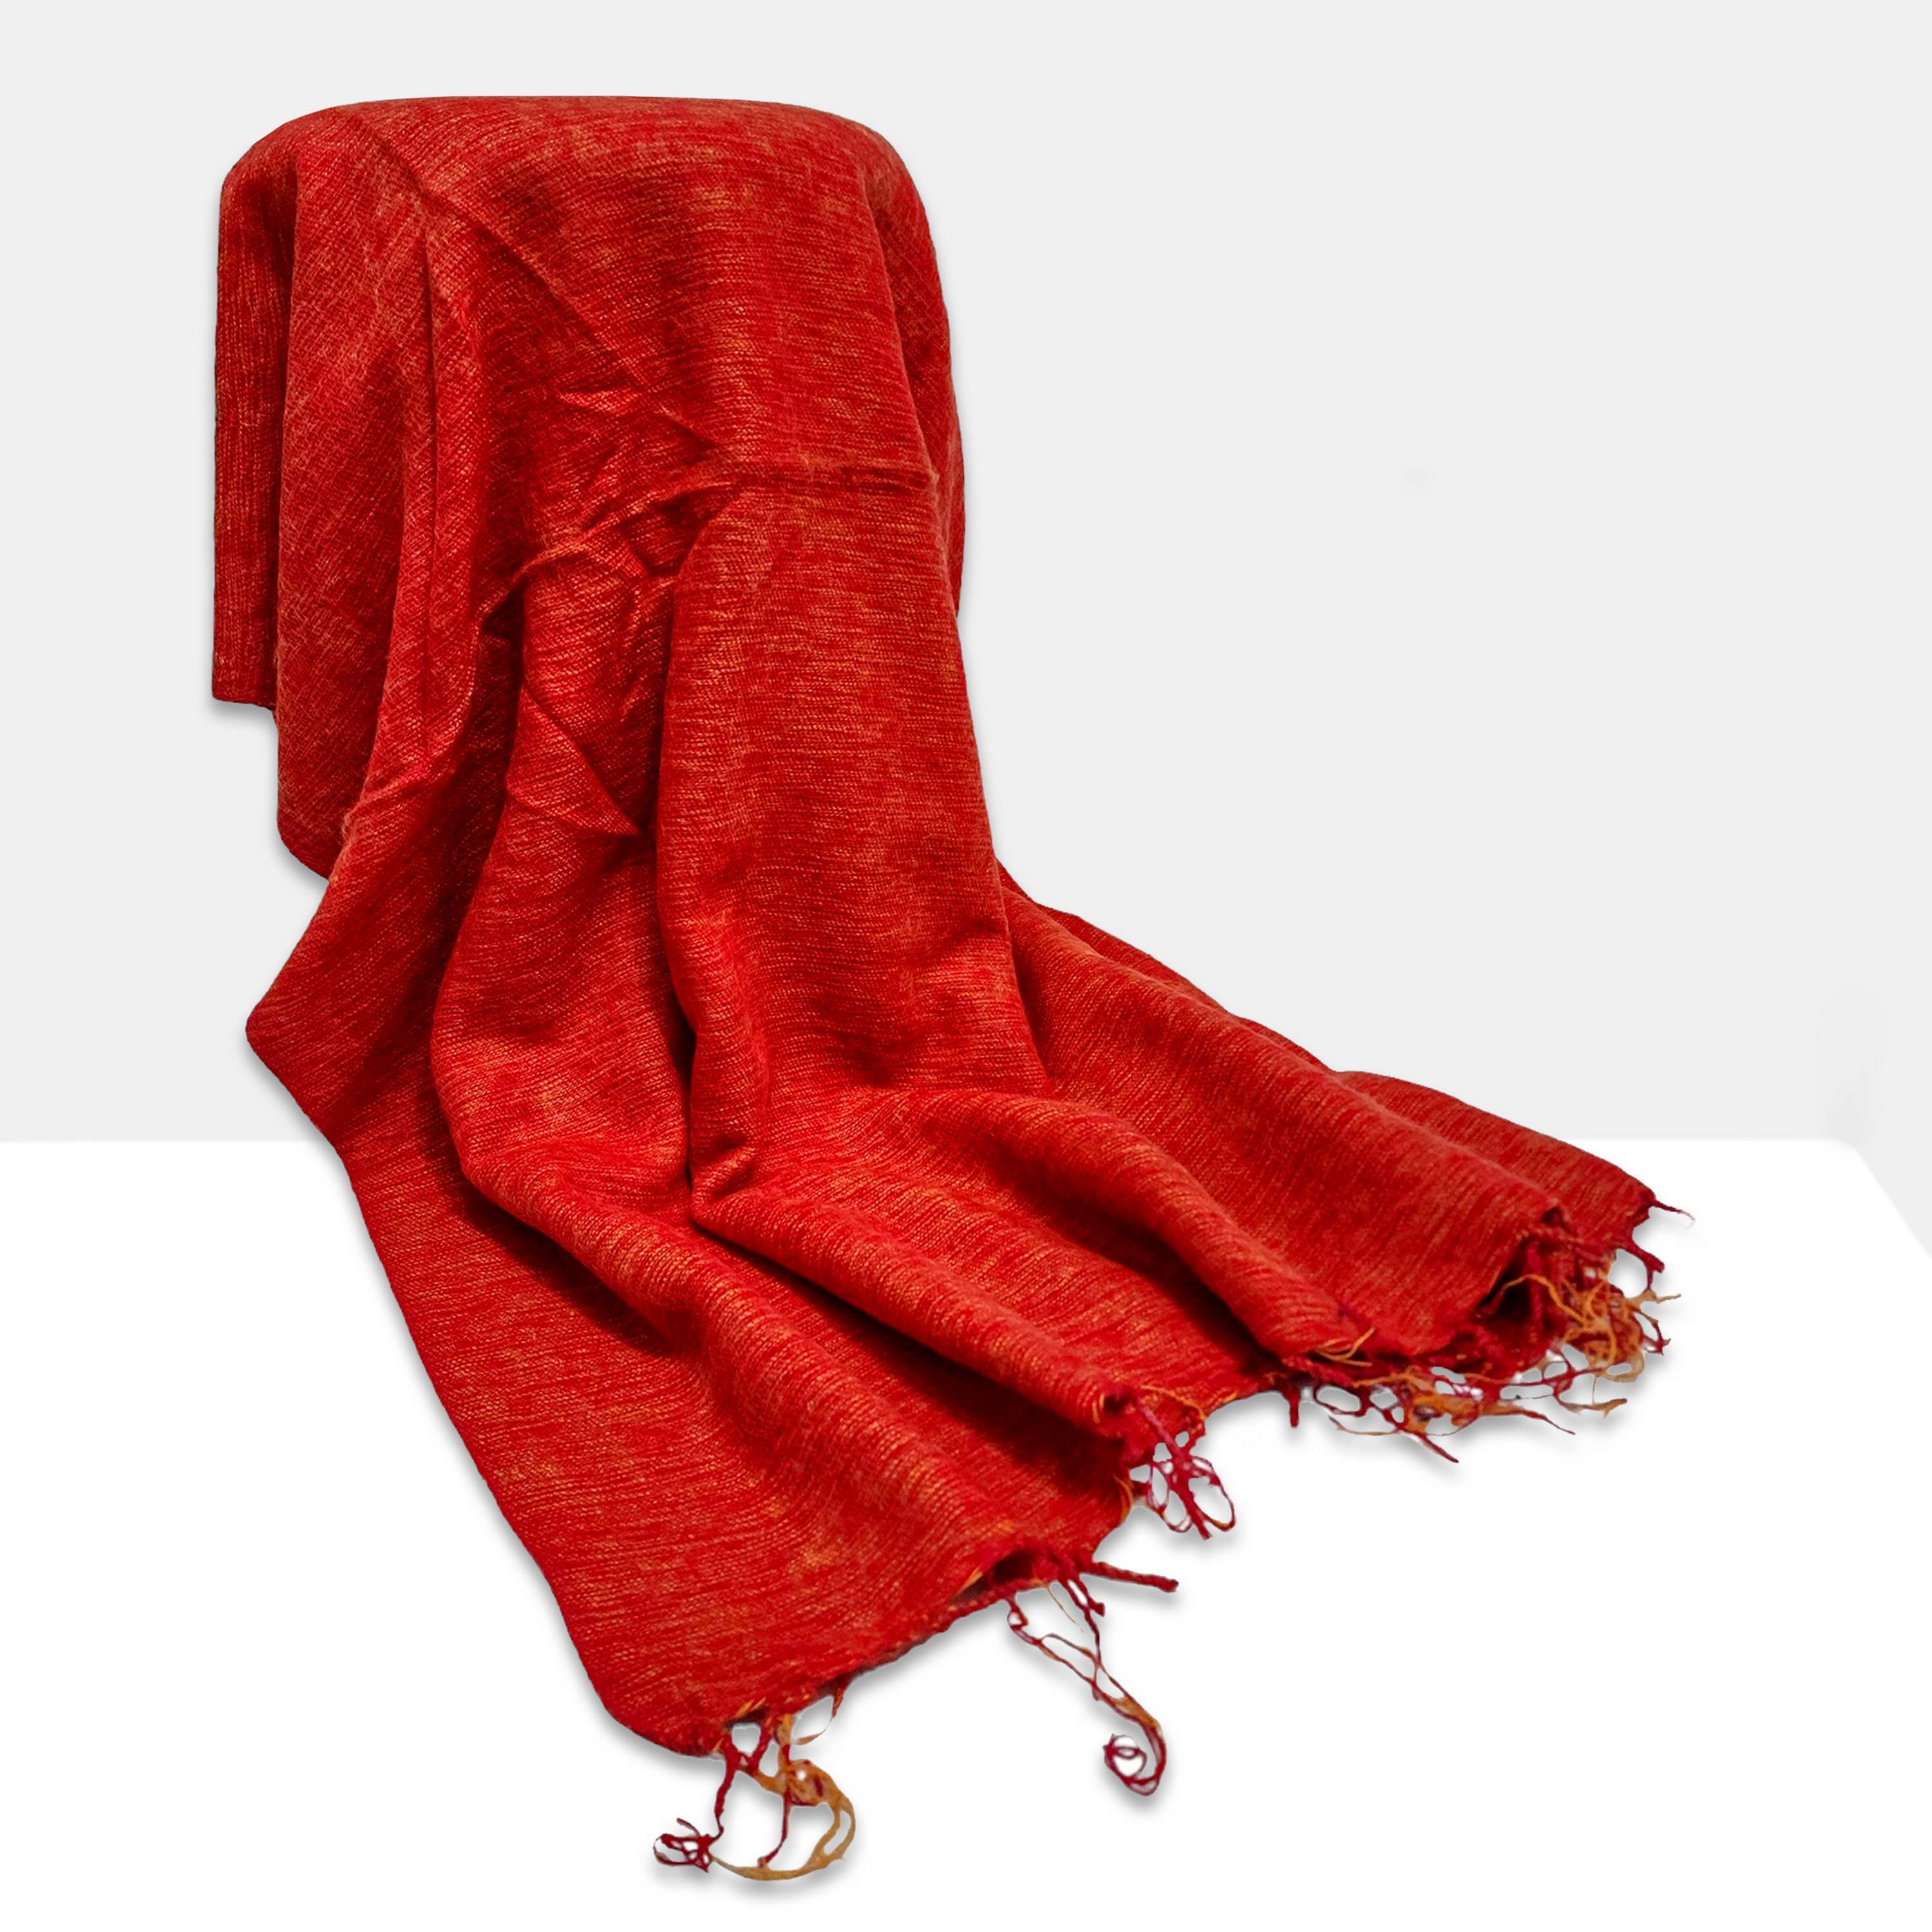 Yak Wool Blanket, Nepali Acrylic Hand Loom Blanket, Color red